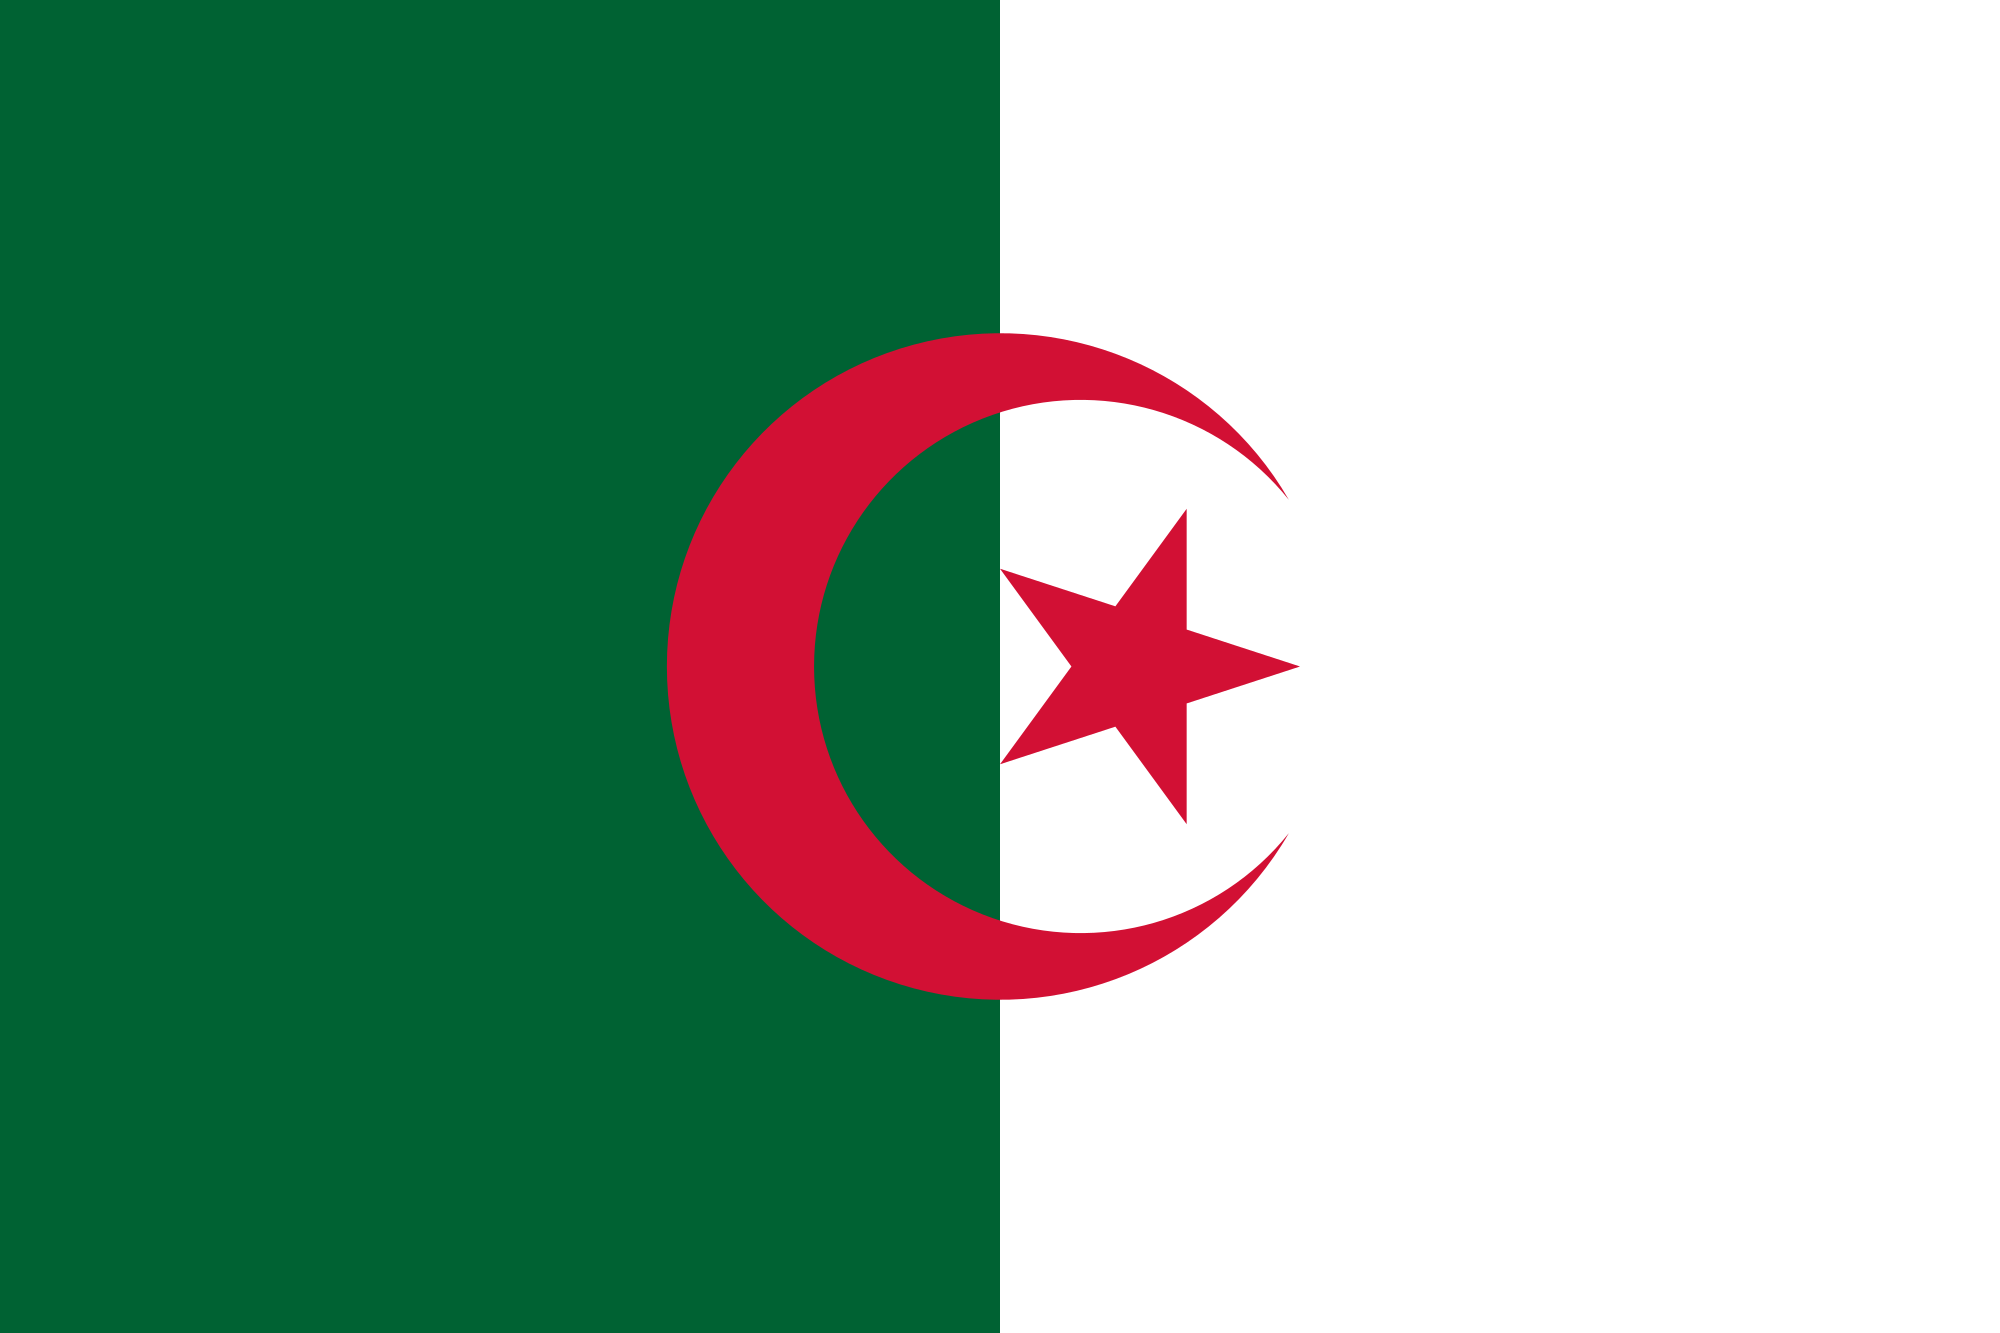 Algeria denies suspending friendship treaty with Spain